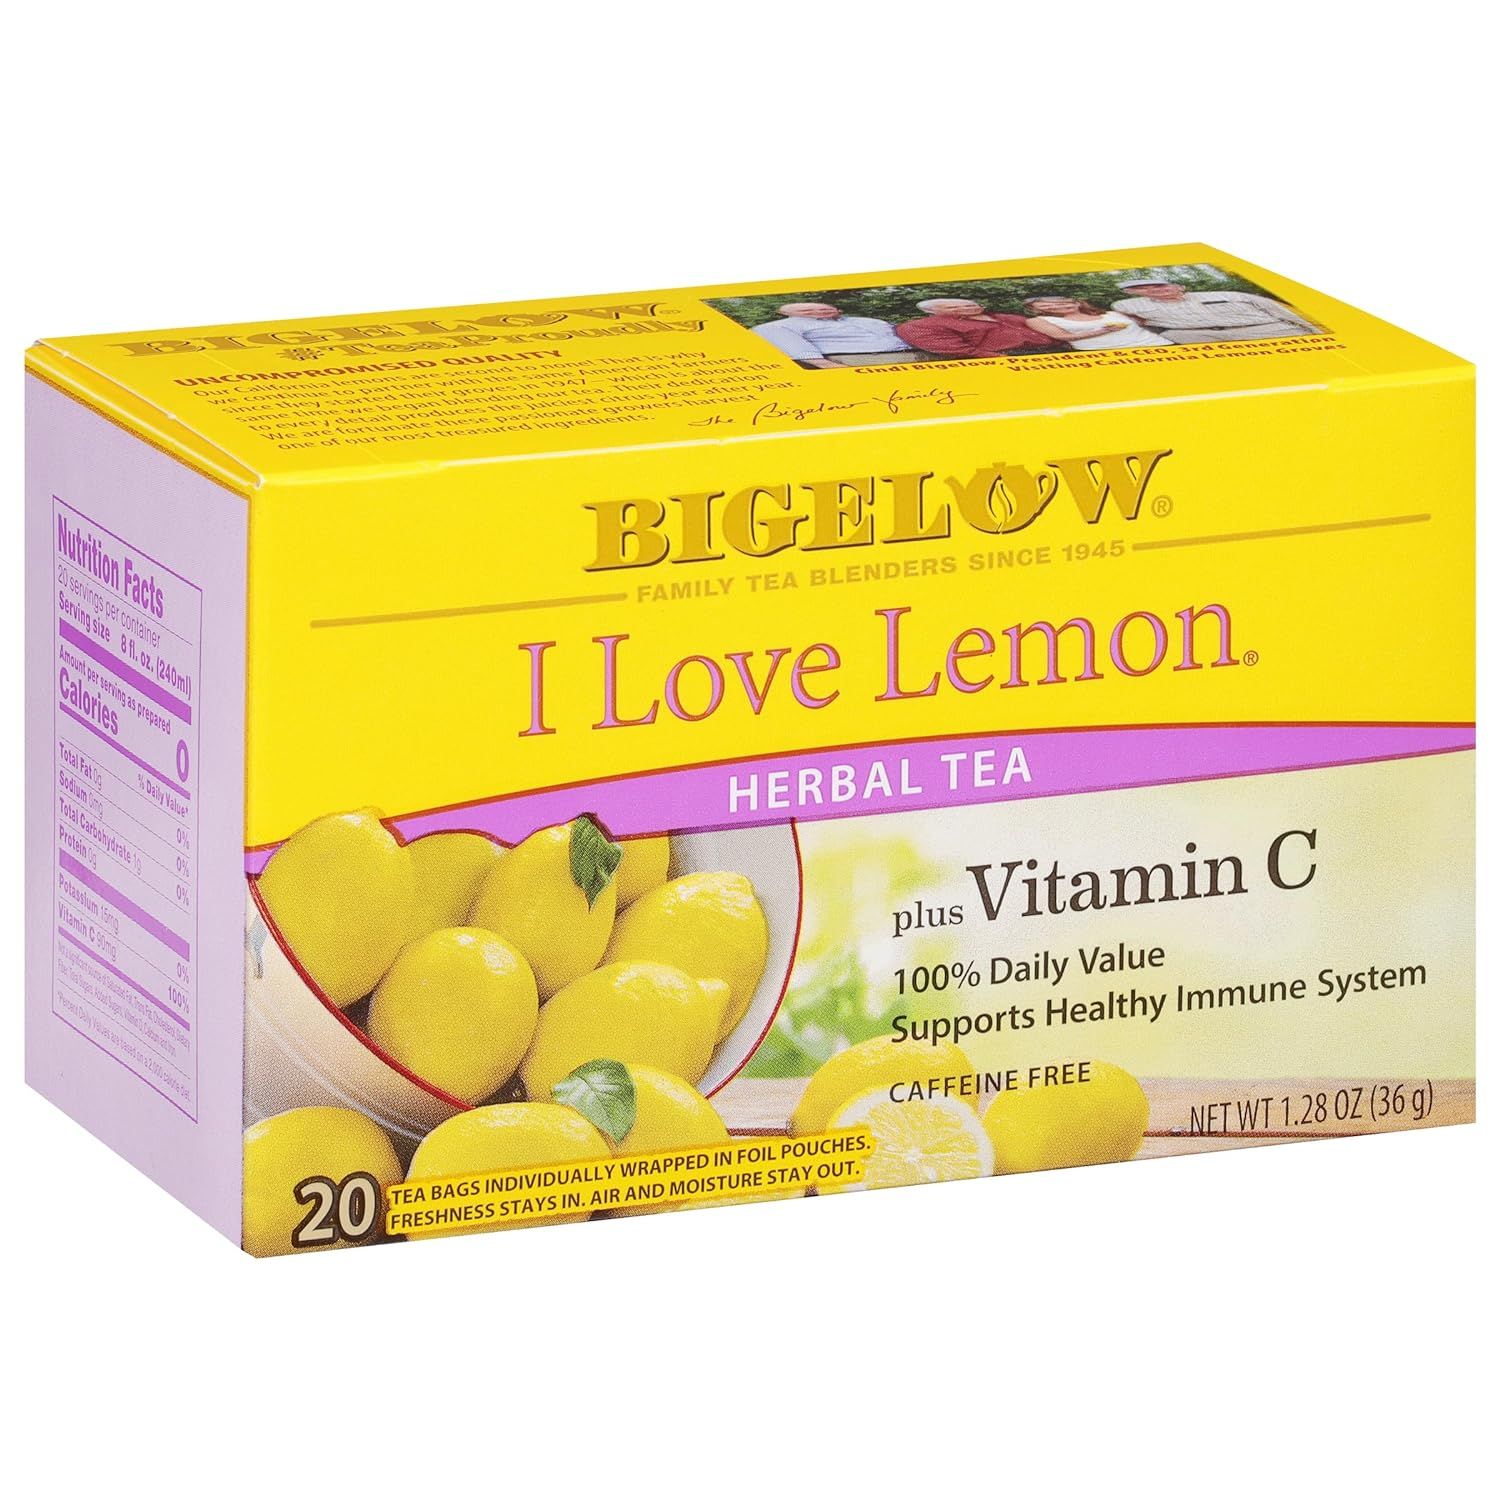 Bigelow Tea I Love Lemon with Vitamin C Herbal Tea, Caffeine Free, 20 Count (Pack of 6), 120 Total Tea Bags $14.83